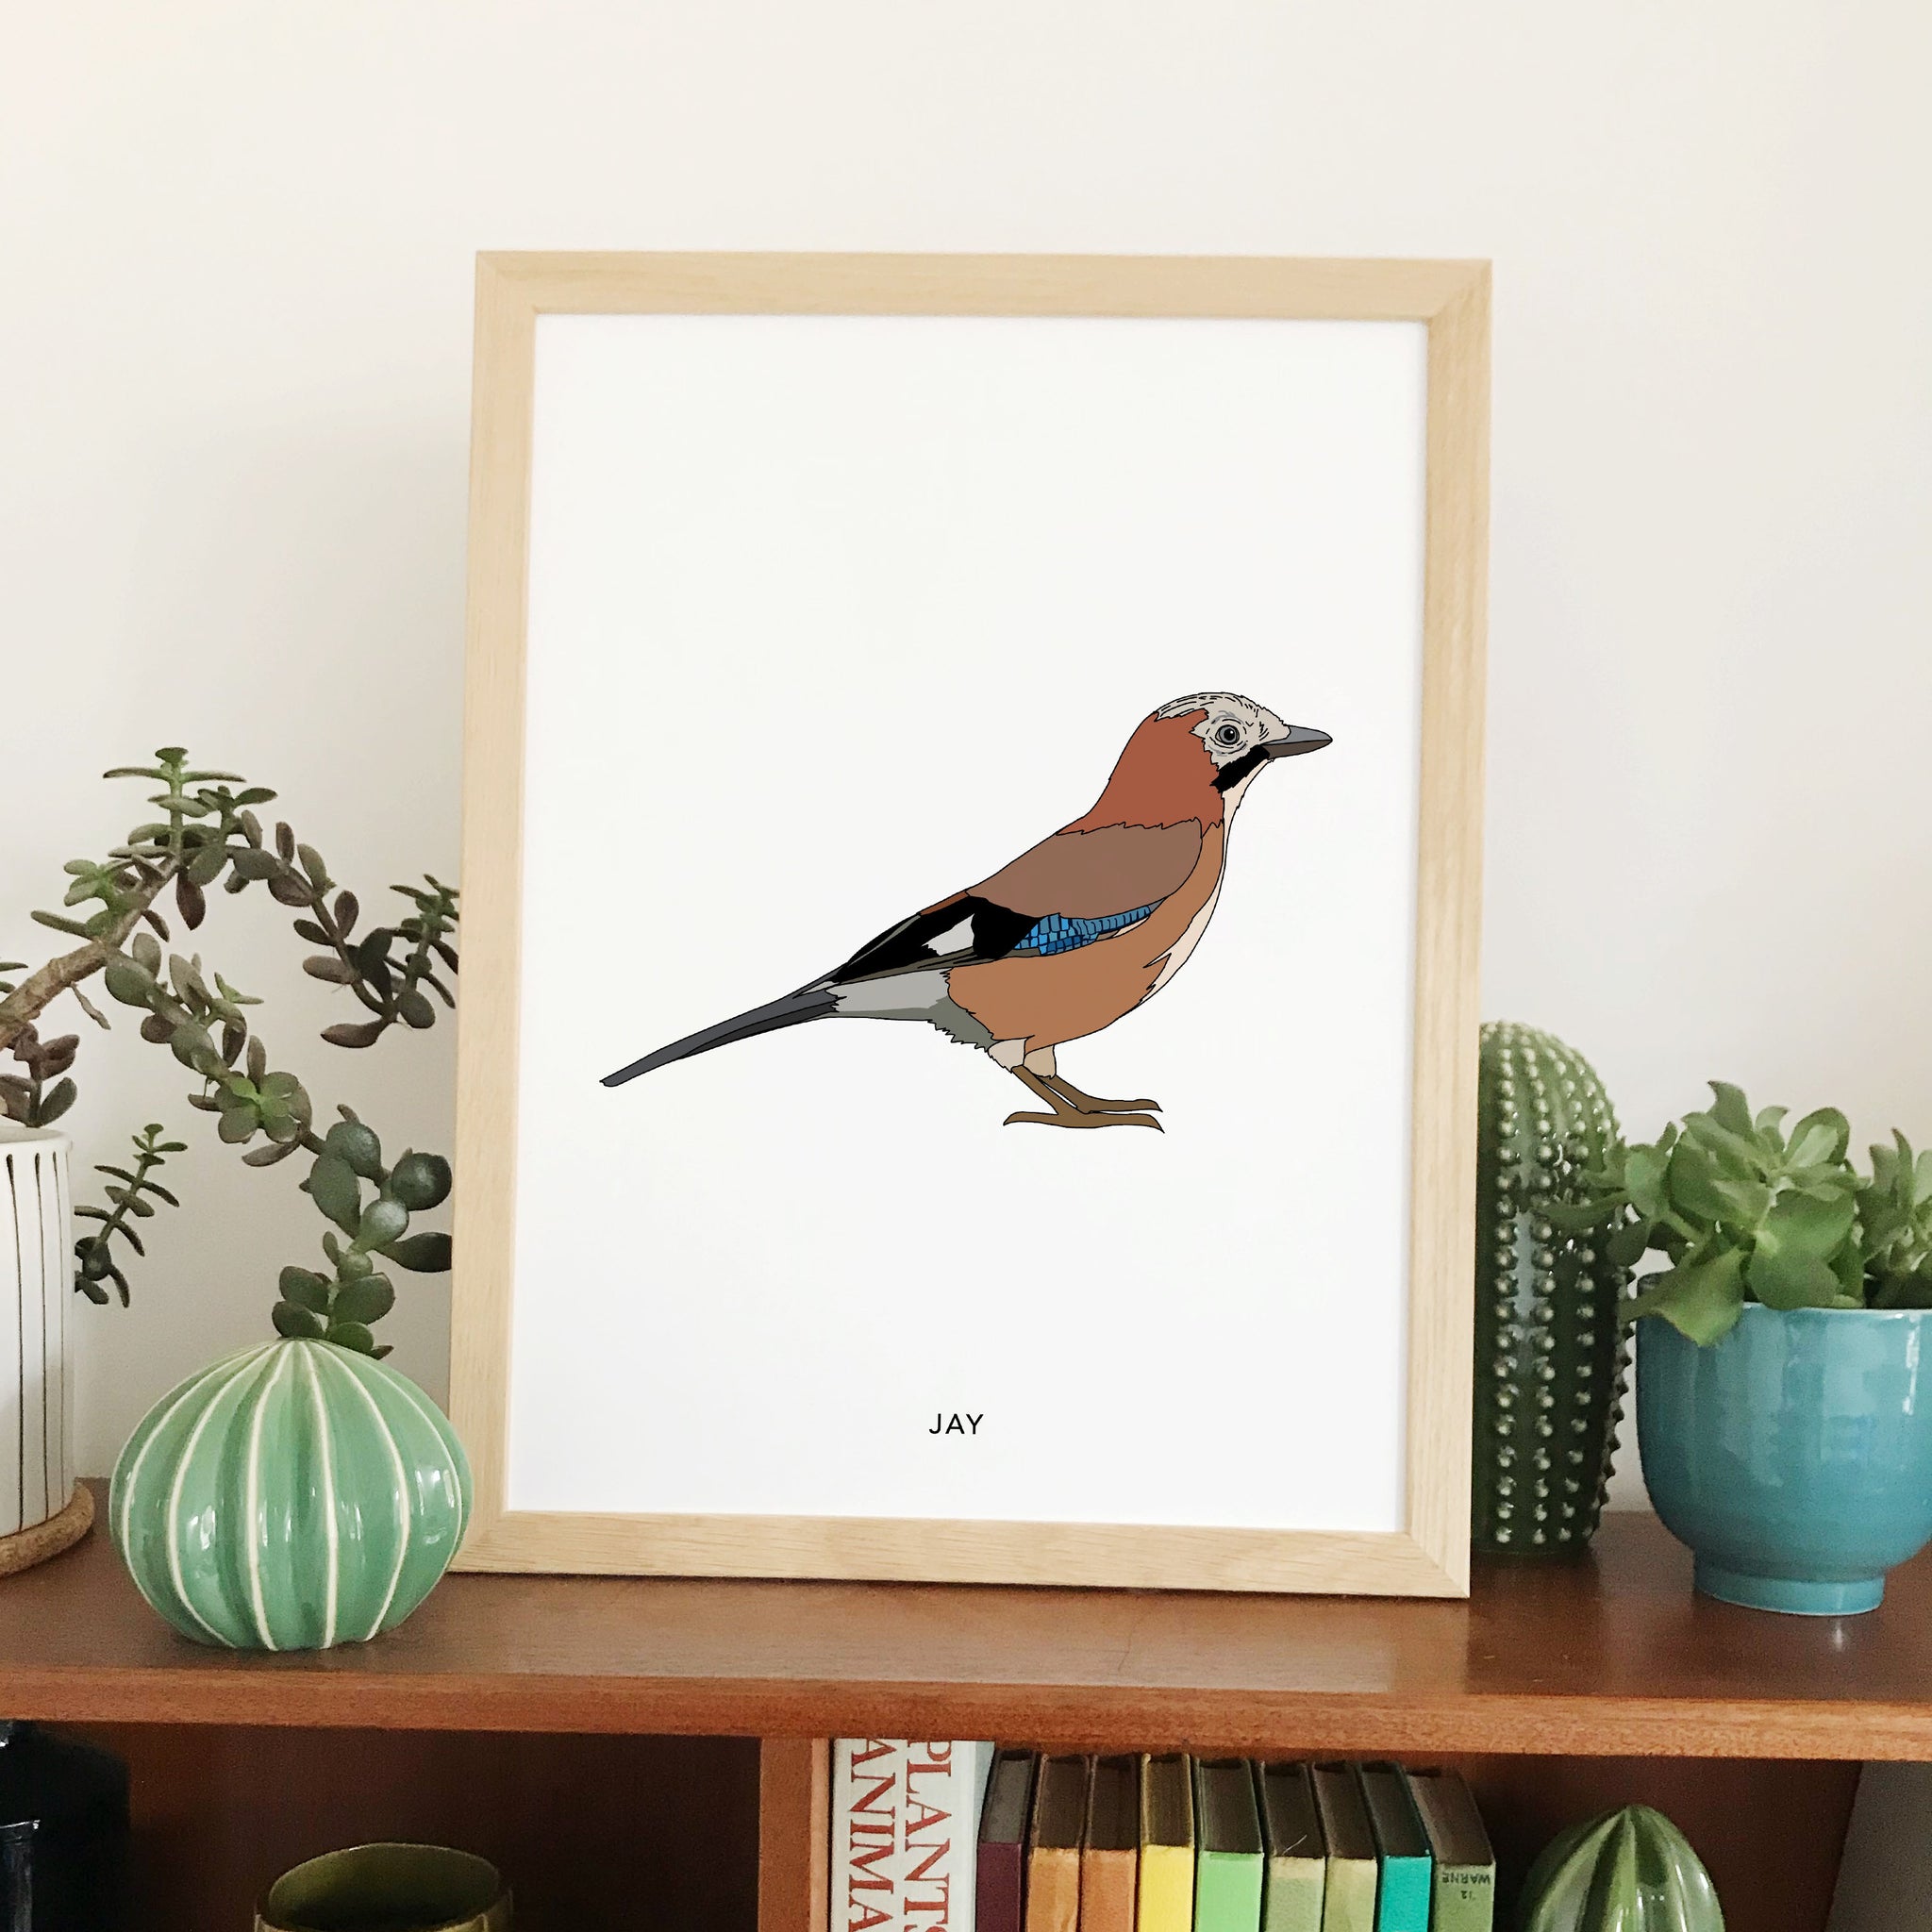 Jay bird print